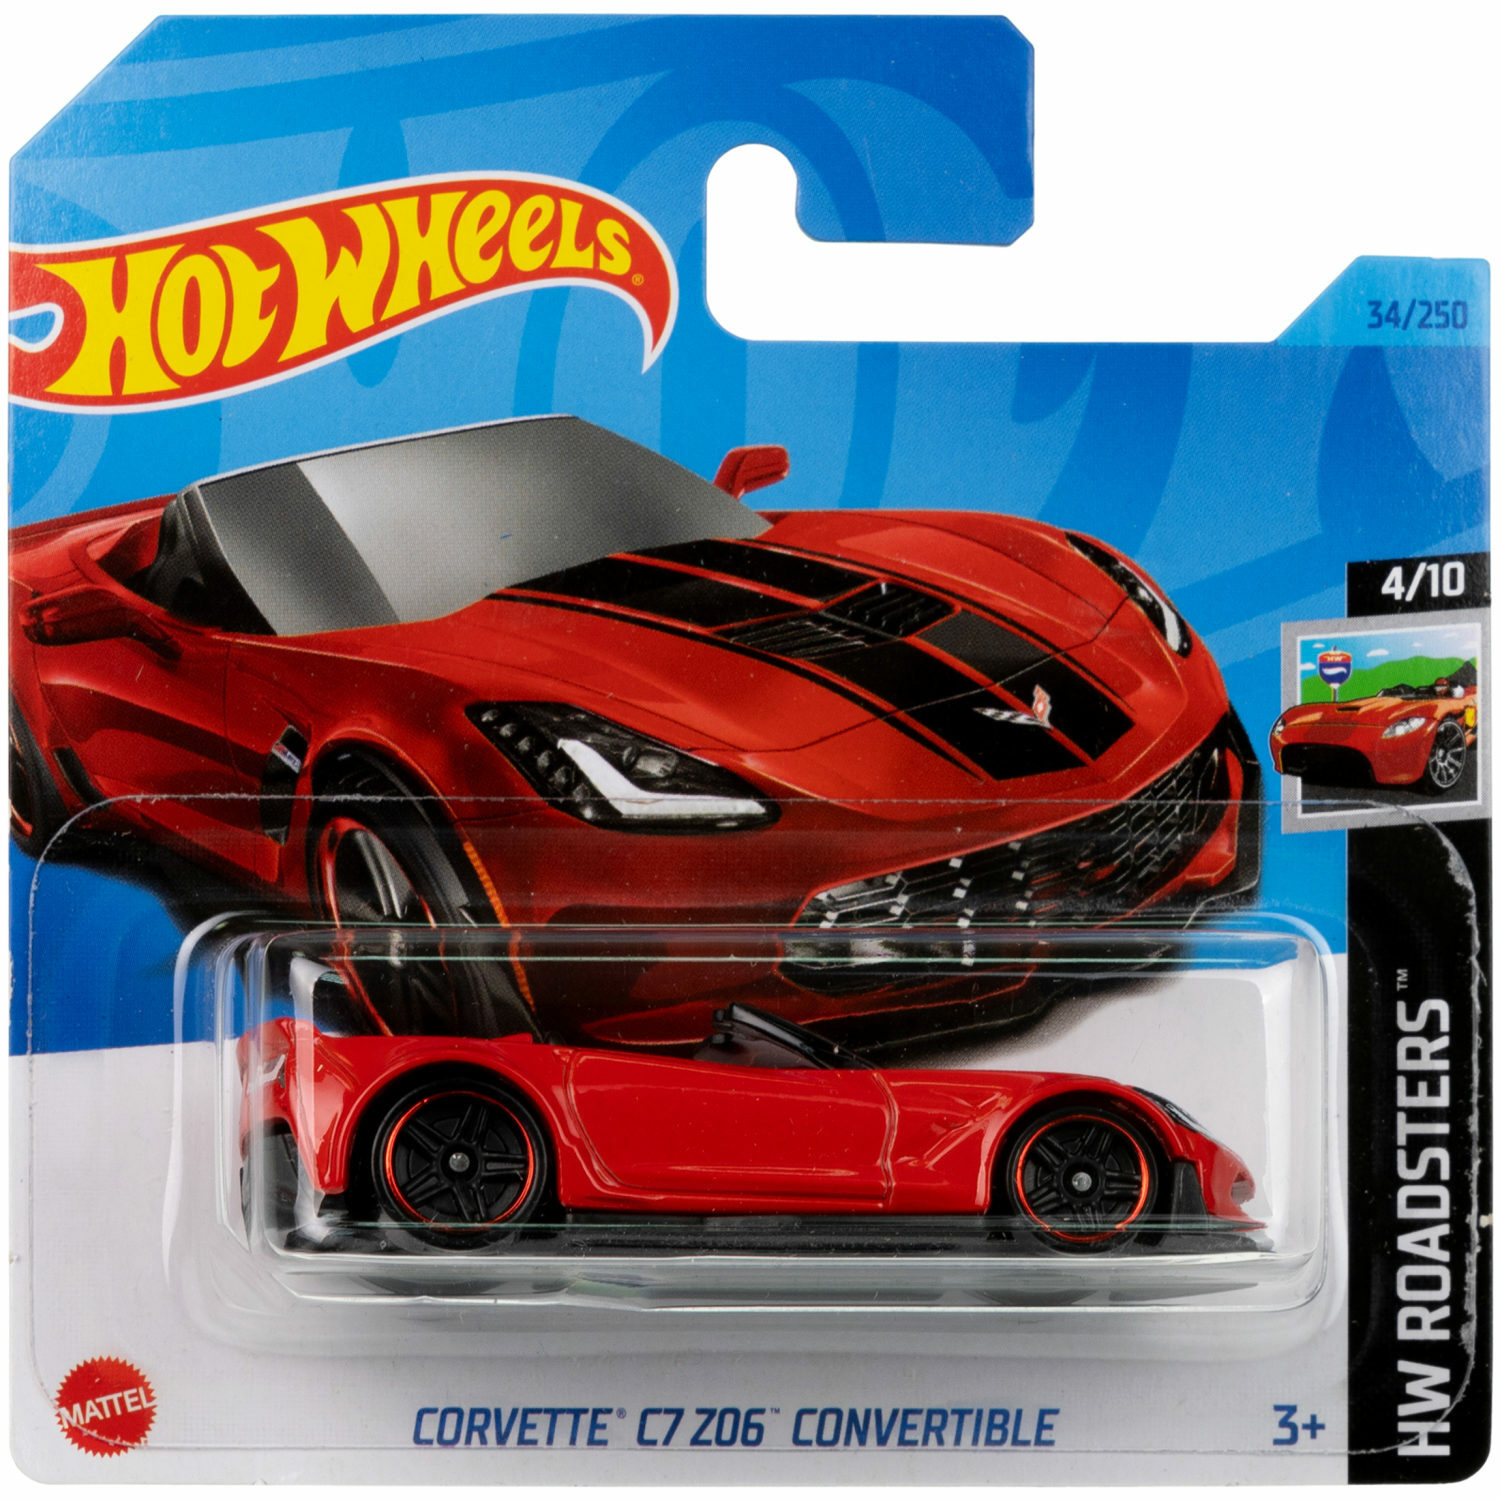 Коллекционная машинка Hot Wheels Corvette c7 z06 convertible 5785-122 - фото 6